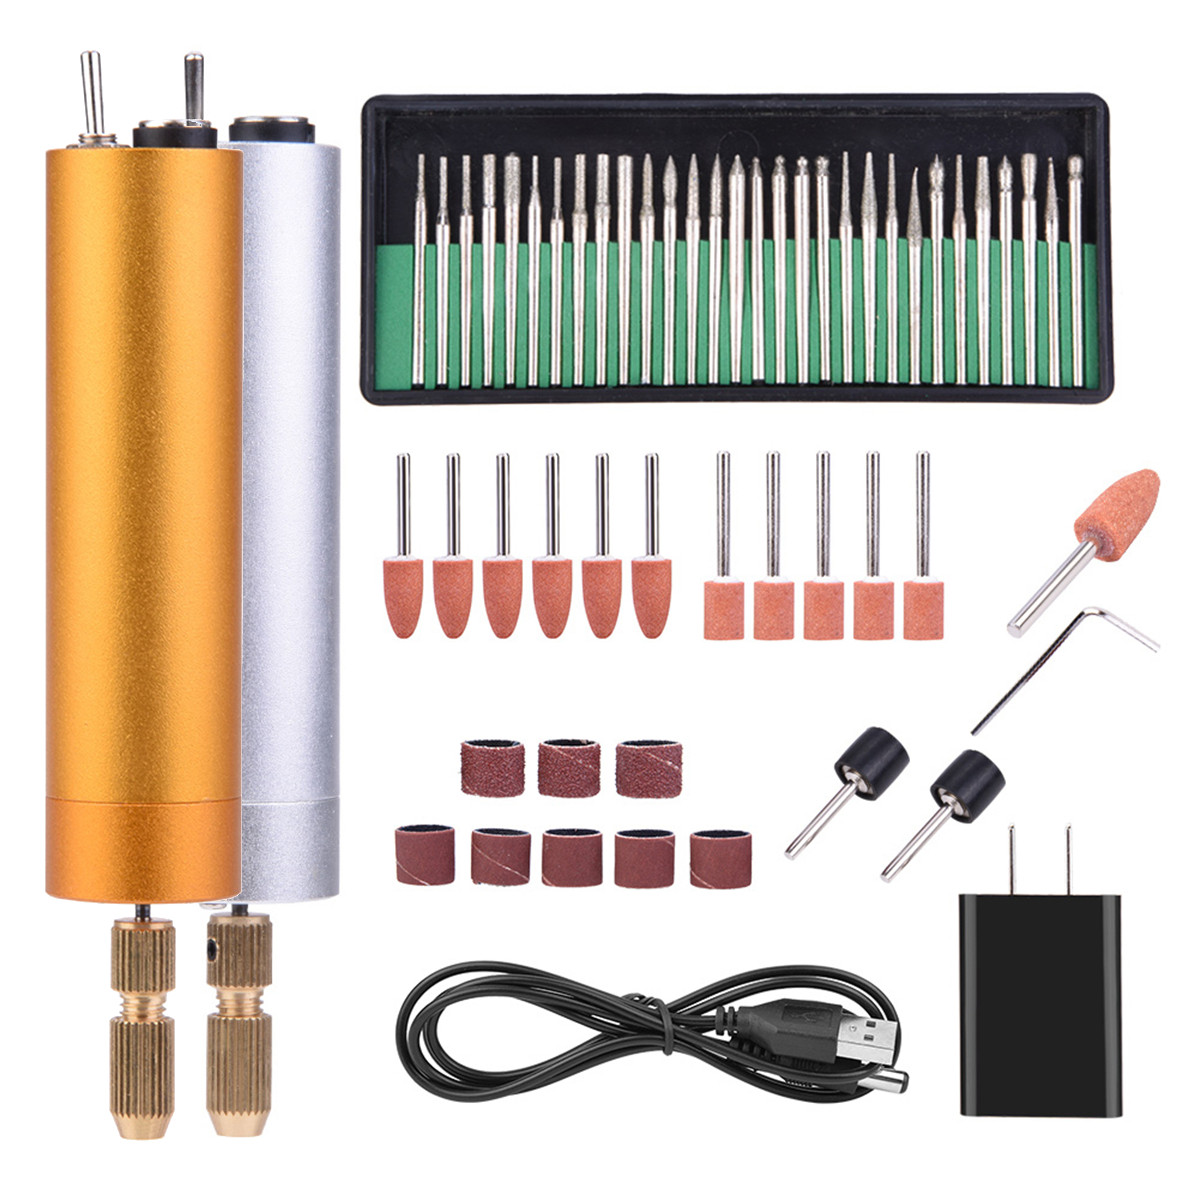 

AC 110-240V USB Rechargable Mini Electric Rotary Drill Grinder Polisher Engraving Pen Polishing Machine Tool